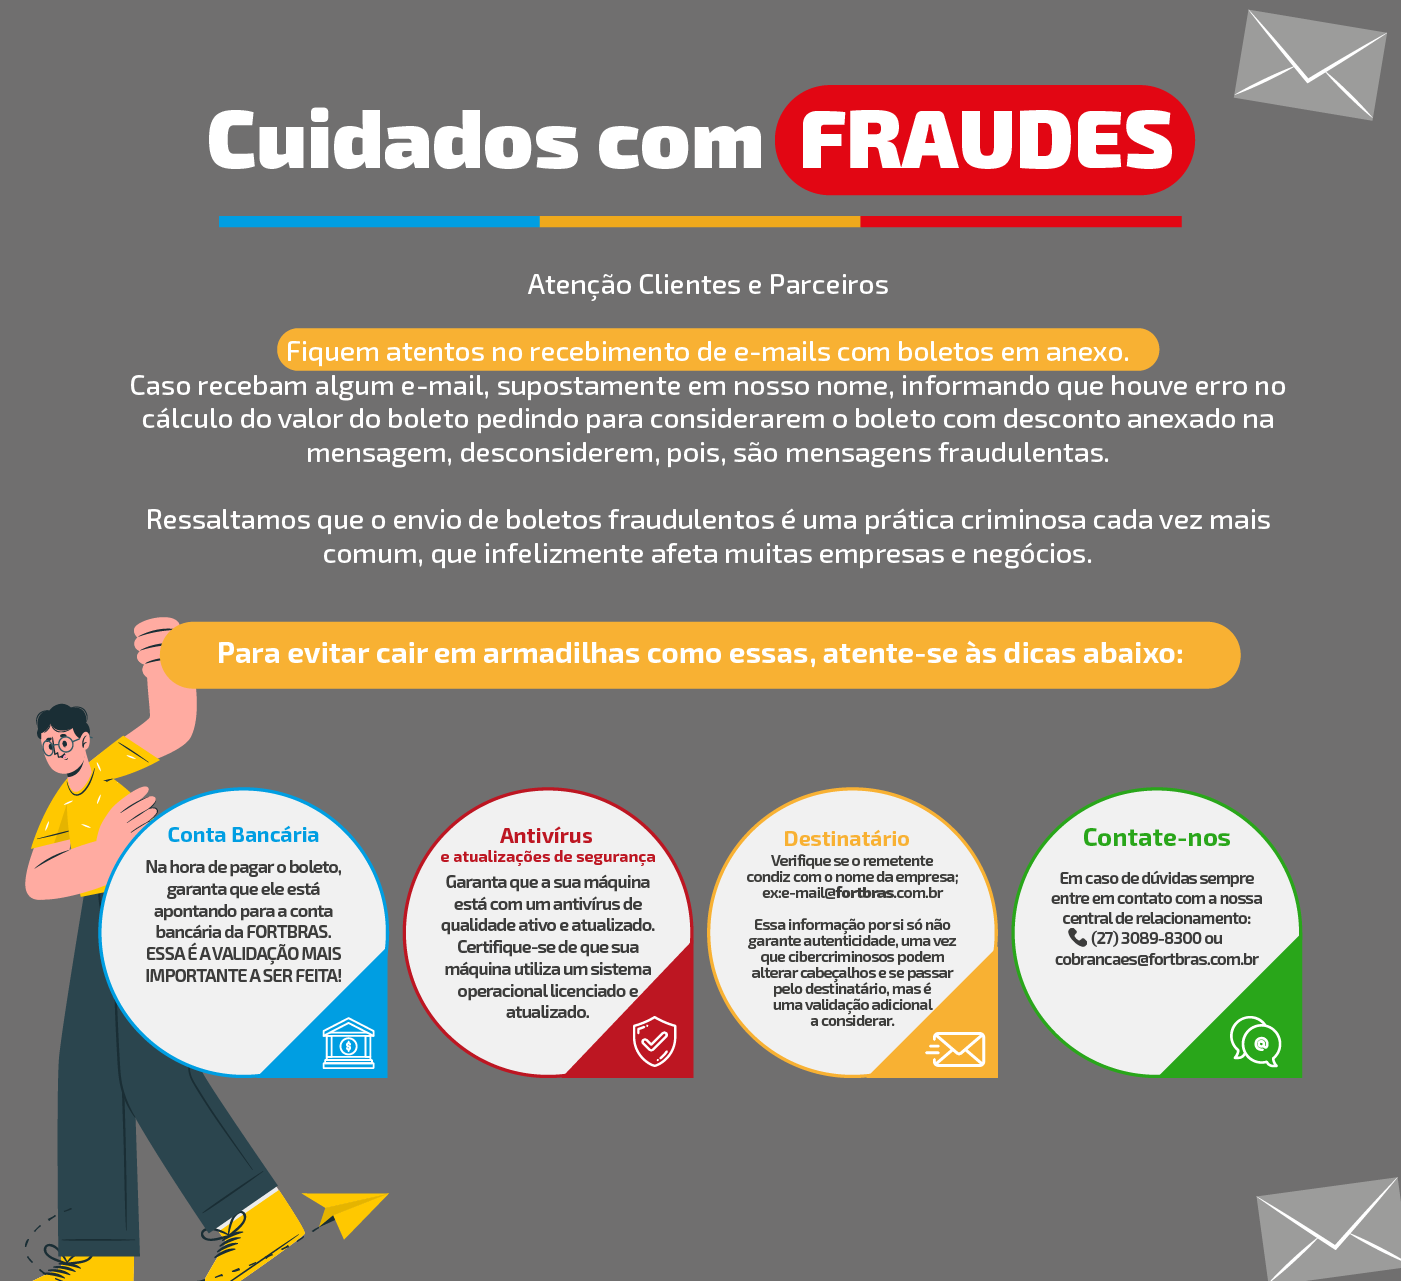 https://ambrapneus.com.br/Fraude - Mobile